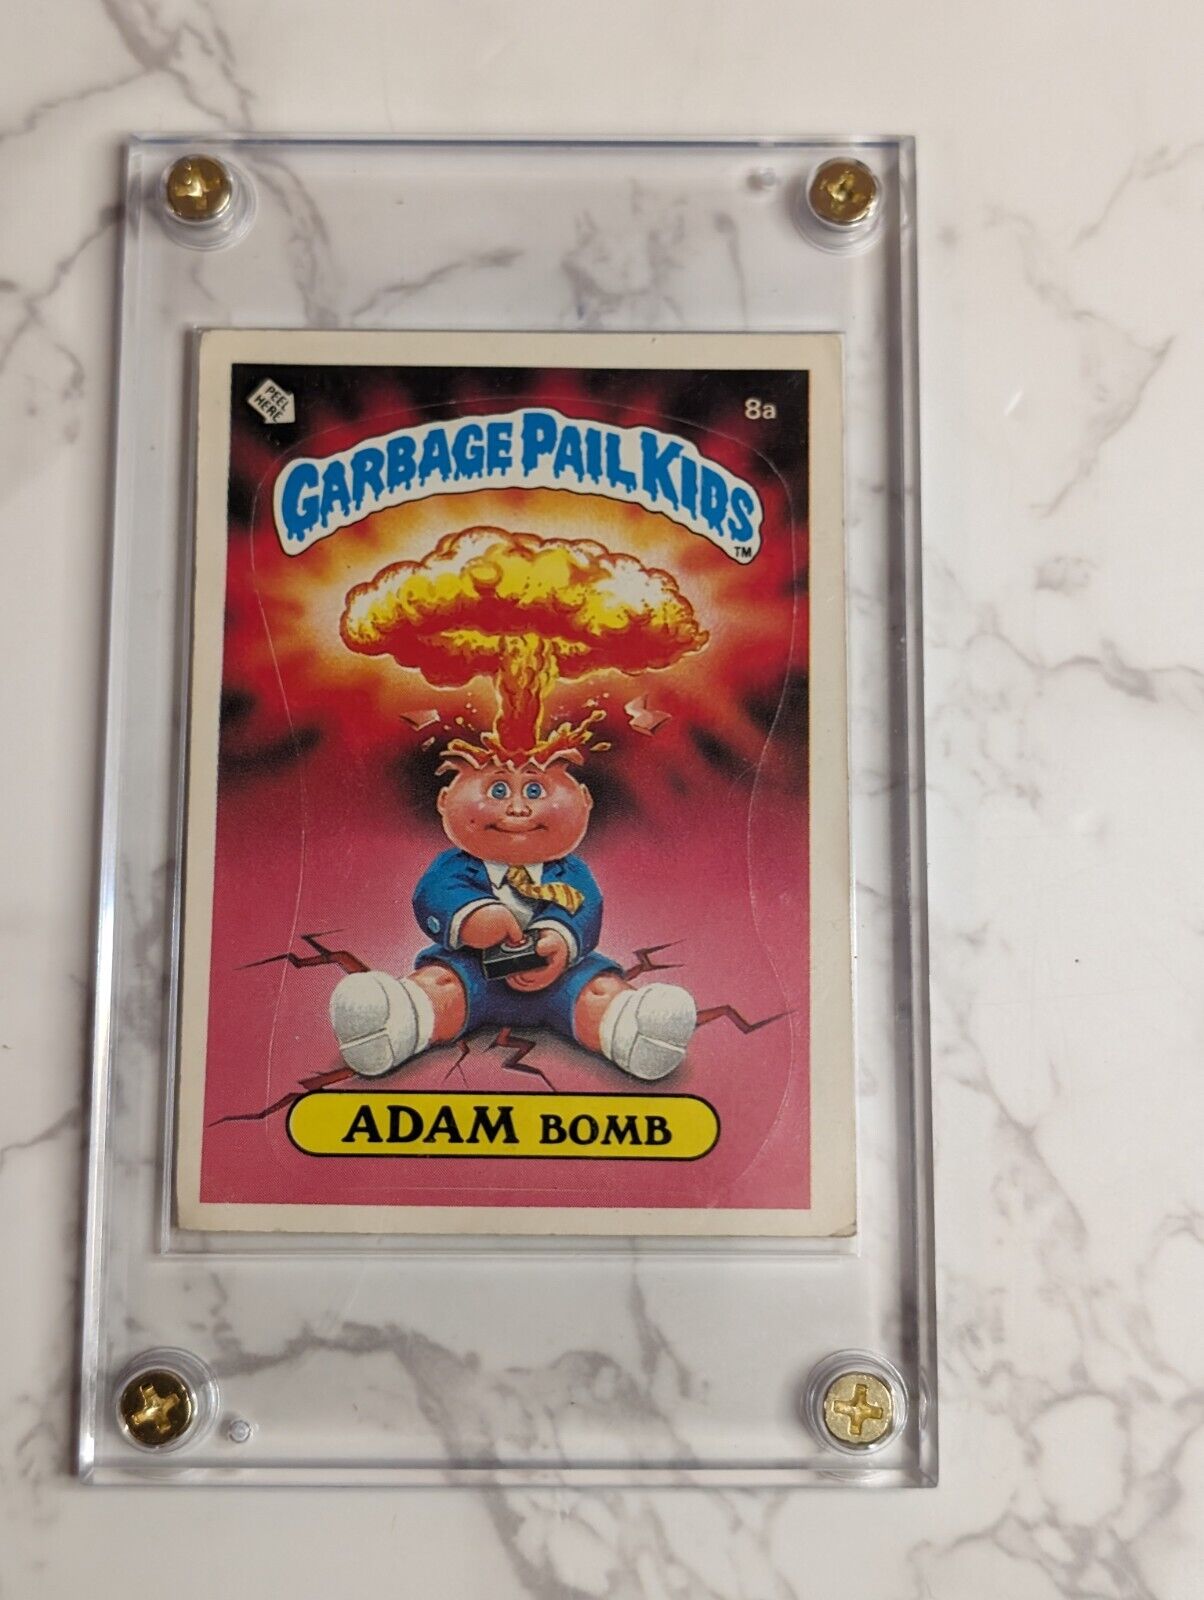 1985 Topps Garbage Pail Kids 1st Series 1 Matte Back Card 8a Adam Bomb Award Bck